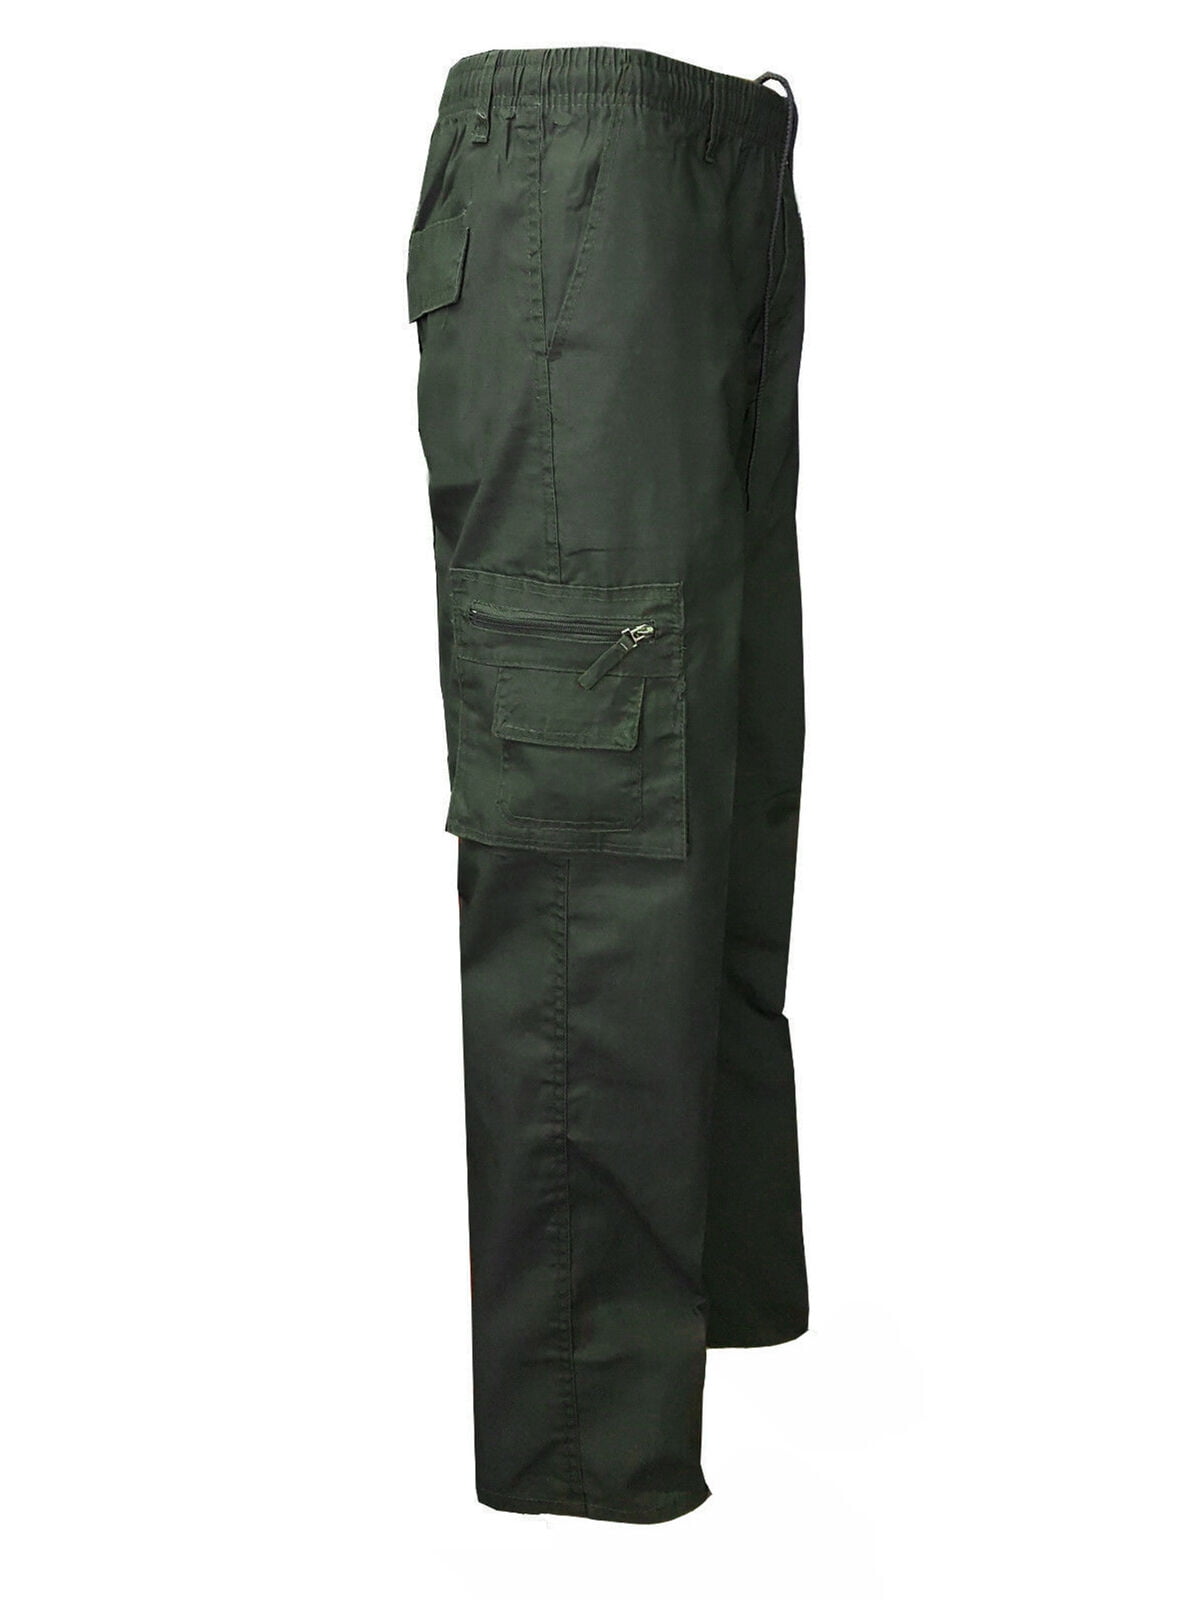 Hot Men's Elasticated Cargo Combat Trousers Lightweight Work Bottoms Pants M-3XL 